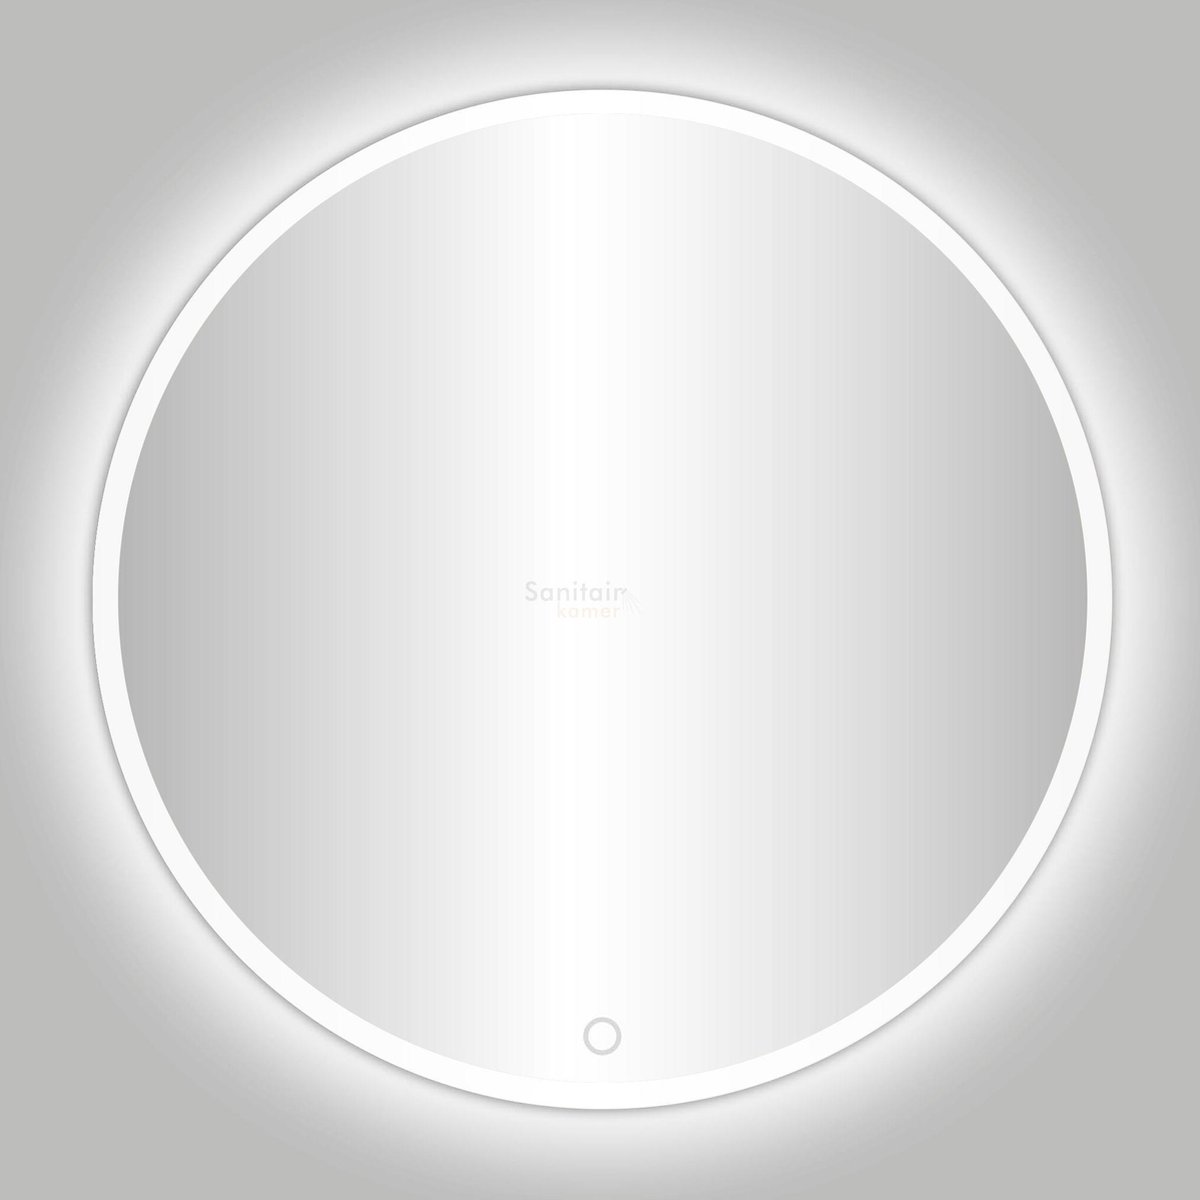 Ced'or White Venetië ronde spiegel wit incl. LED-verlichting Ø 60cm 4009300